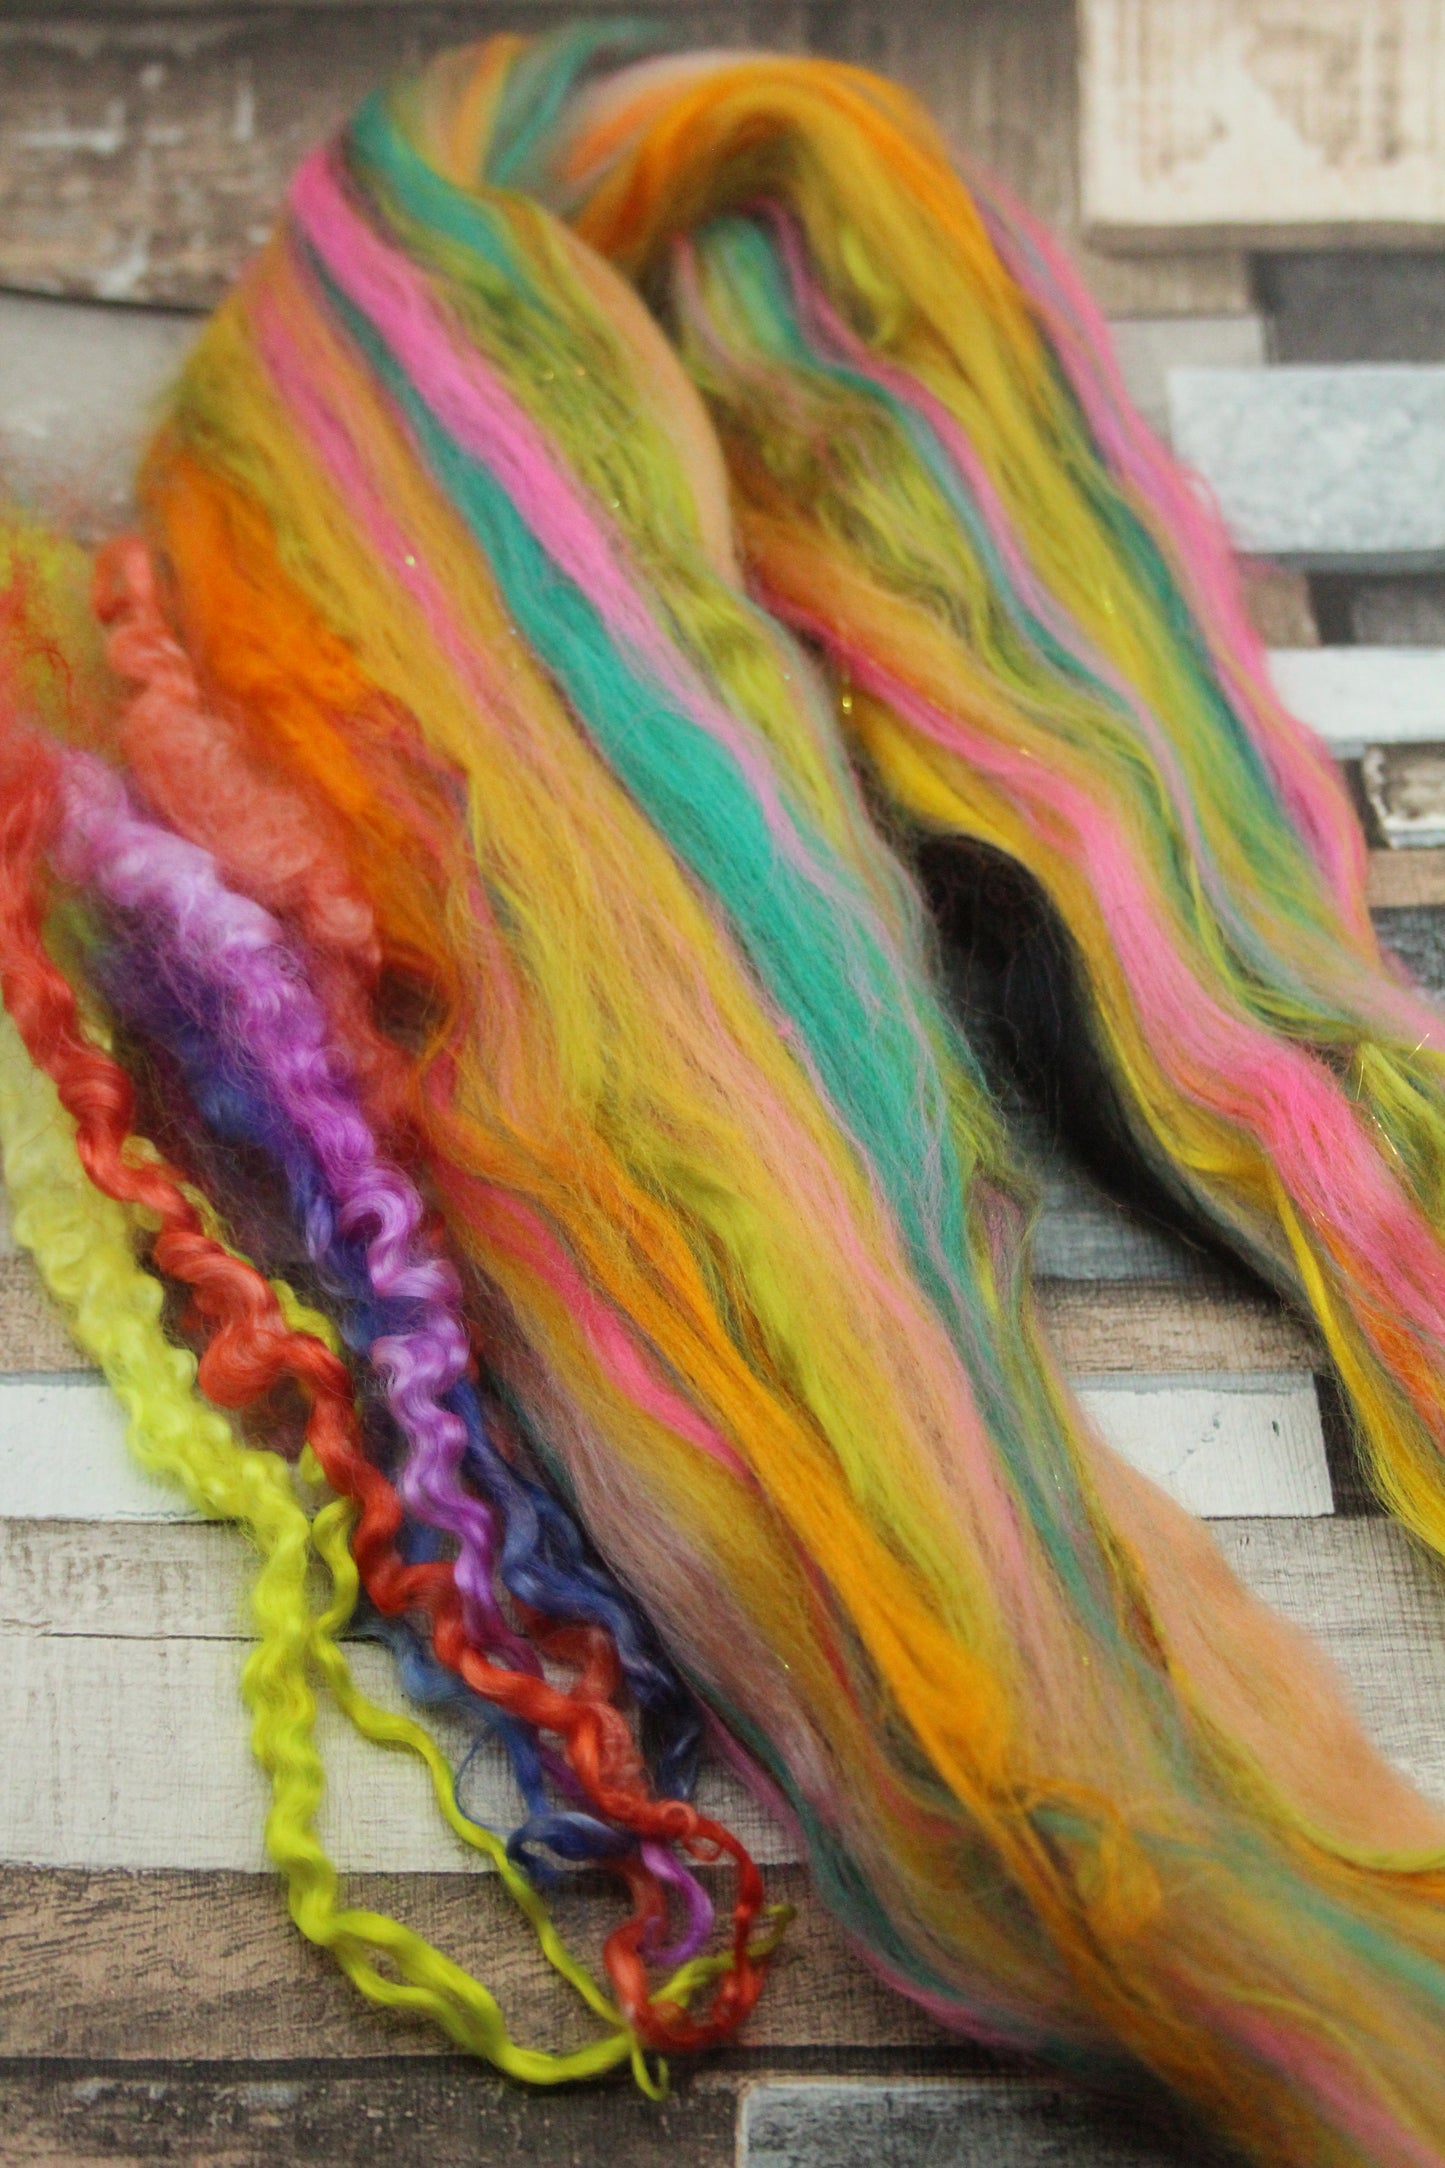 Merino Wool Blend - Yellow Green Pink Orange - 16 grams / 0.5 oz  - Fibre for felting, weaving or spinning